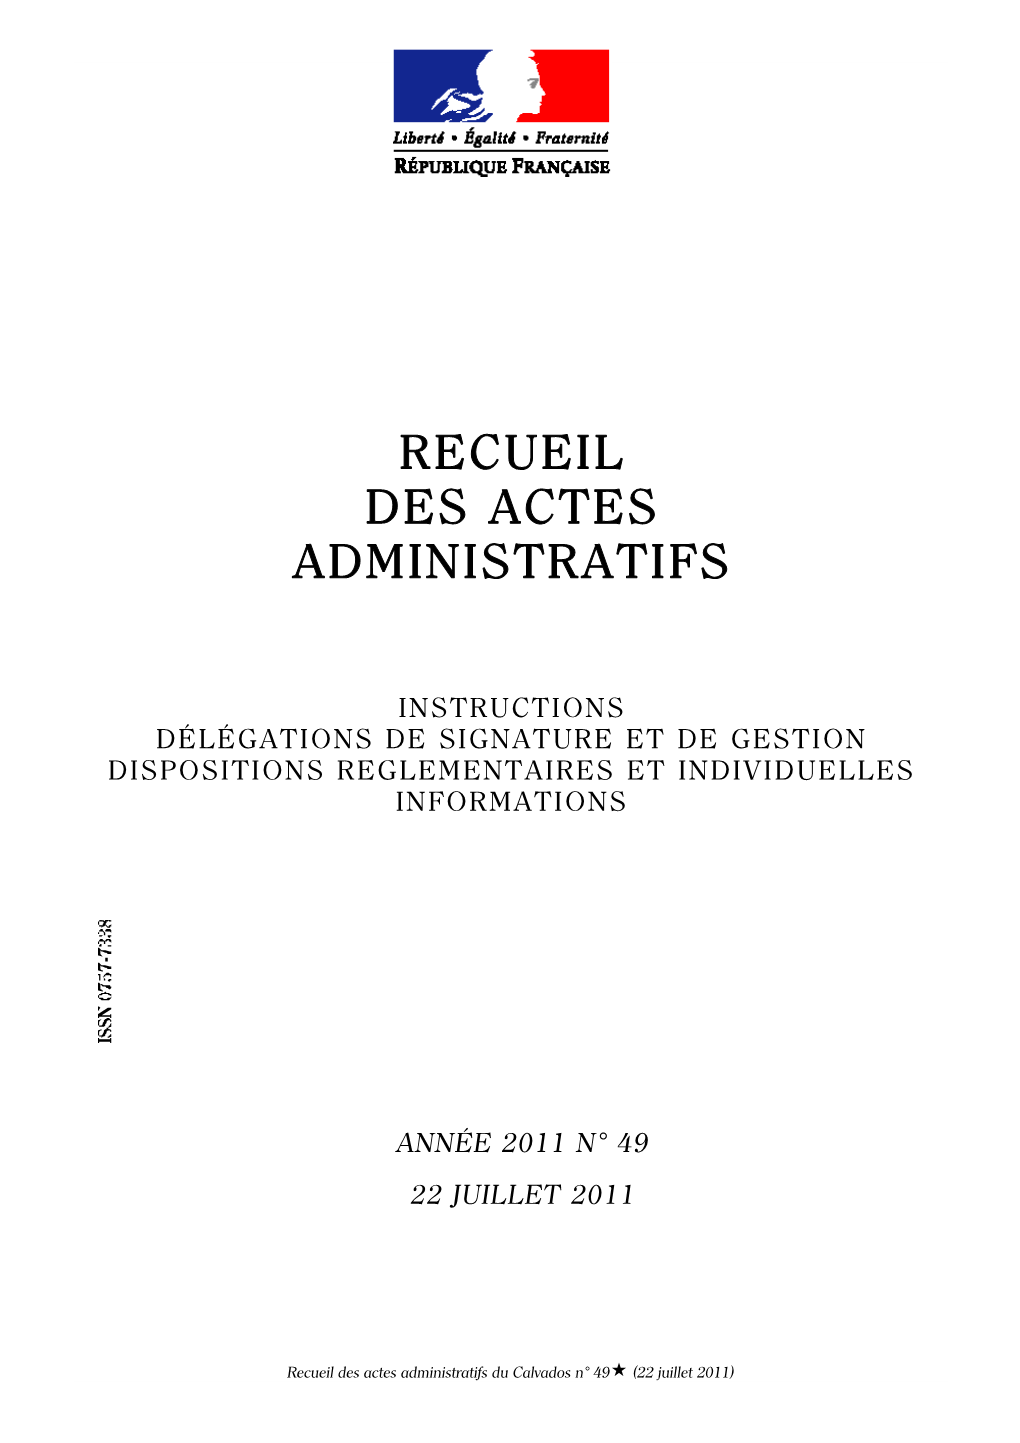 Recueil Des Actes Administratifs N° 49 Du 22